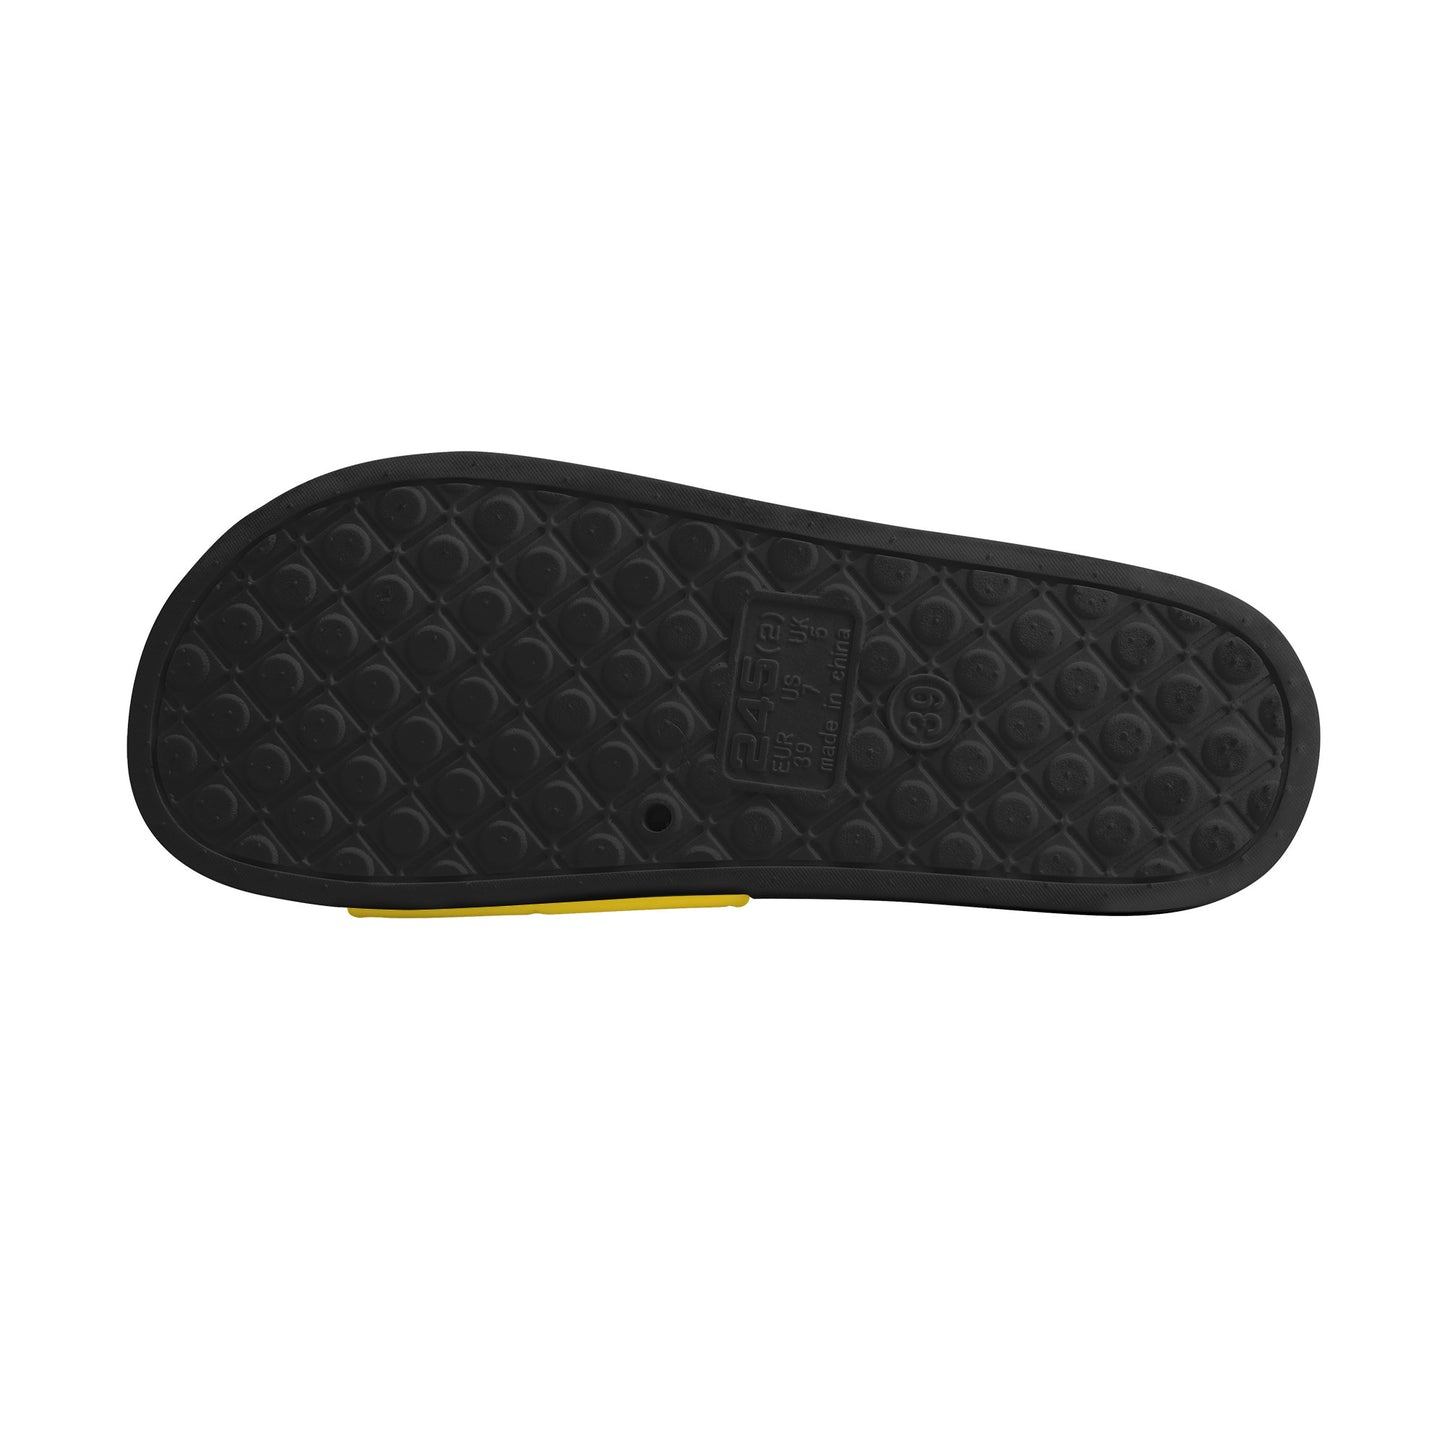 AZONTO Slide Sandals - Black